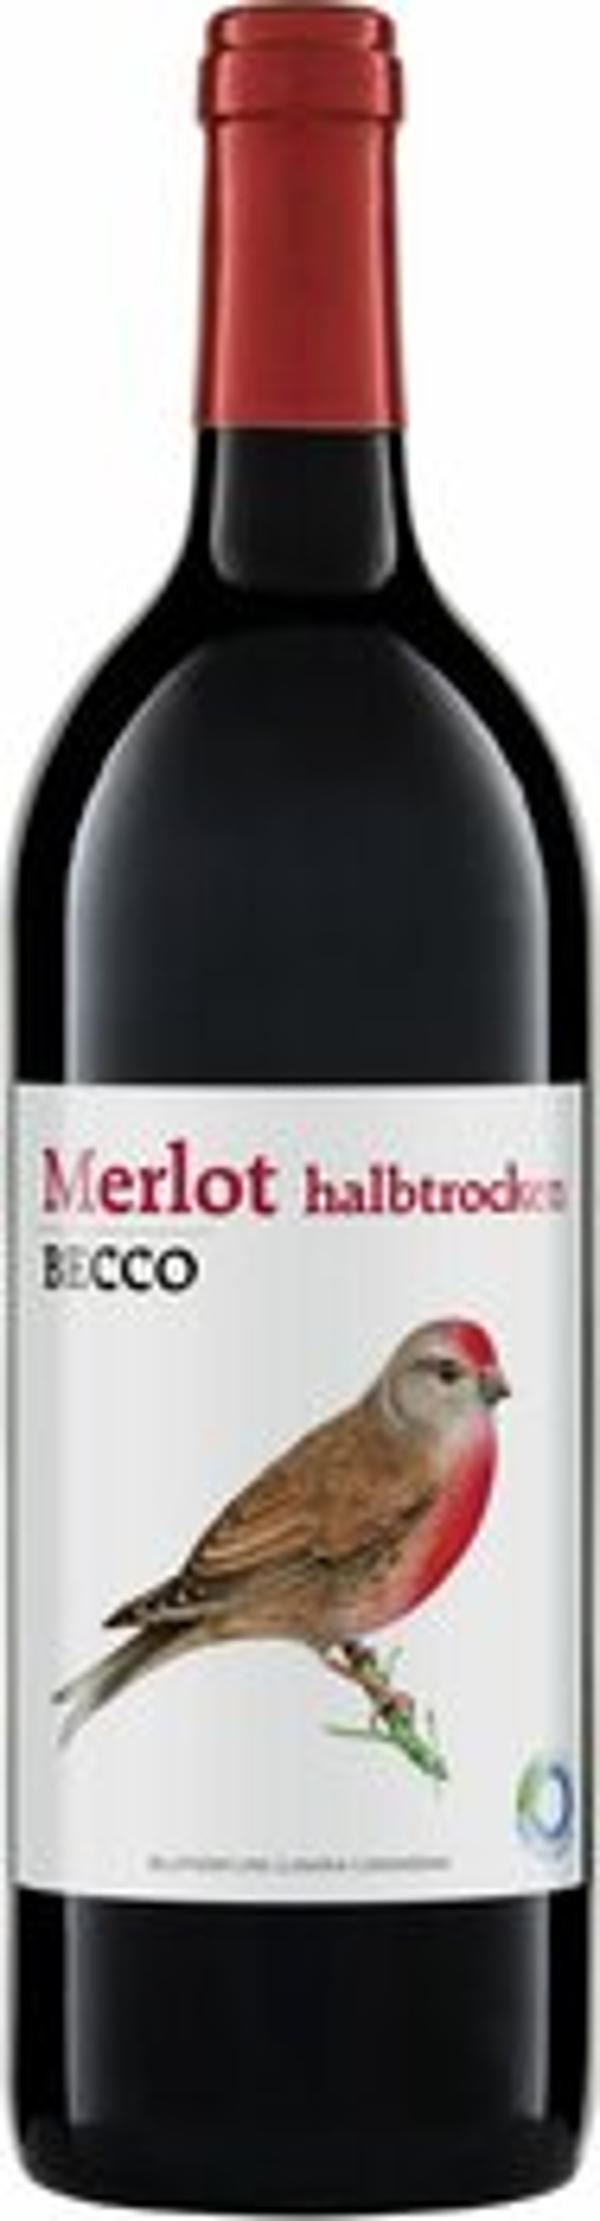 Produktfoto zu Becco Merlot halbtrocken rot